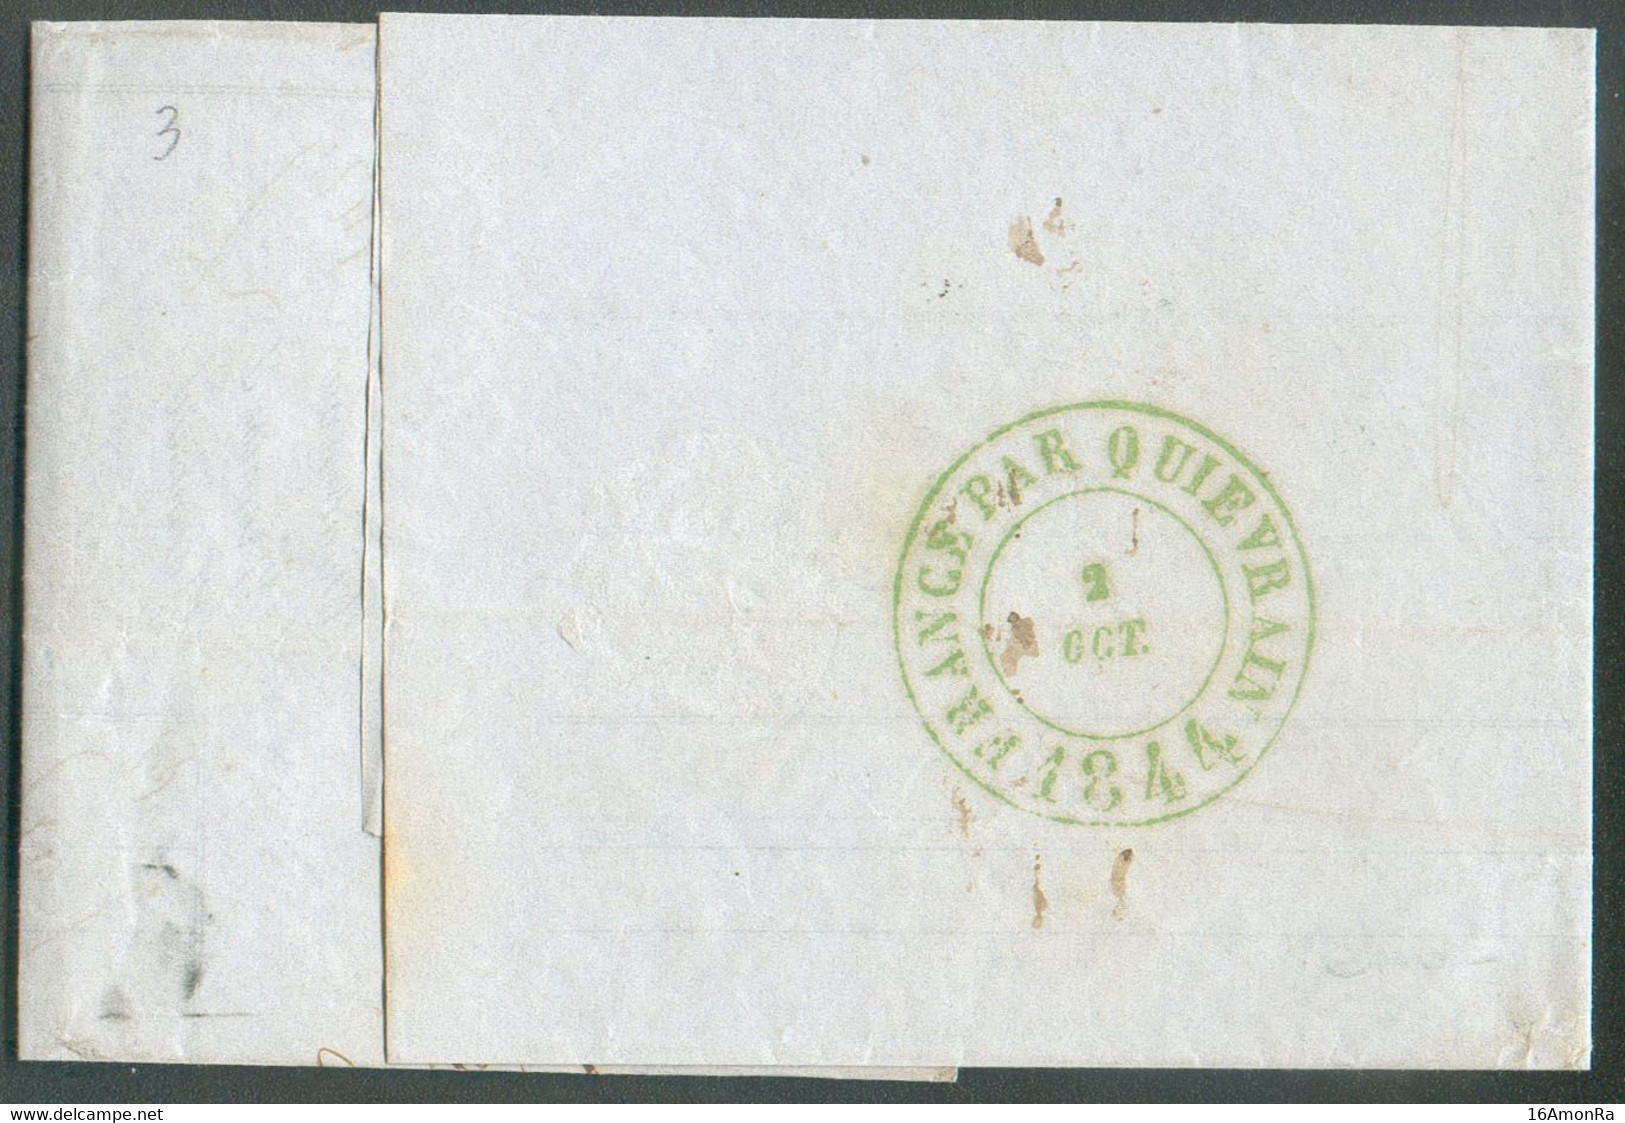 Lettre De ST QUENTIN (FR) Le 2 Octobre 1844 Vers Mons - Verso Cachet Dc Vert FRANCE PAR QUIEVRAIN  - TB - 19515 - Ufficio Di Transito